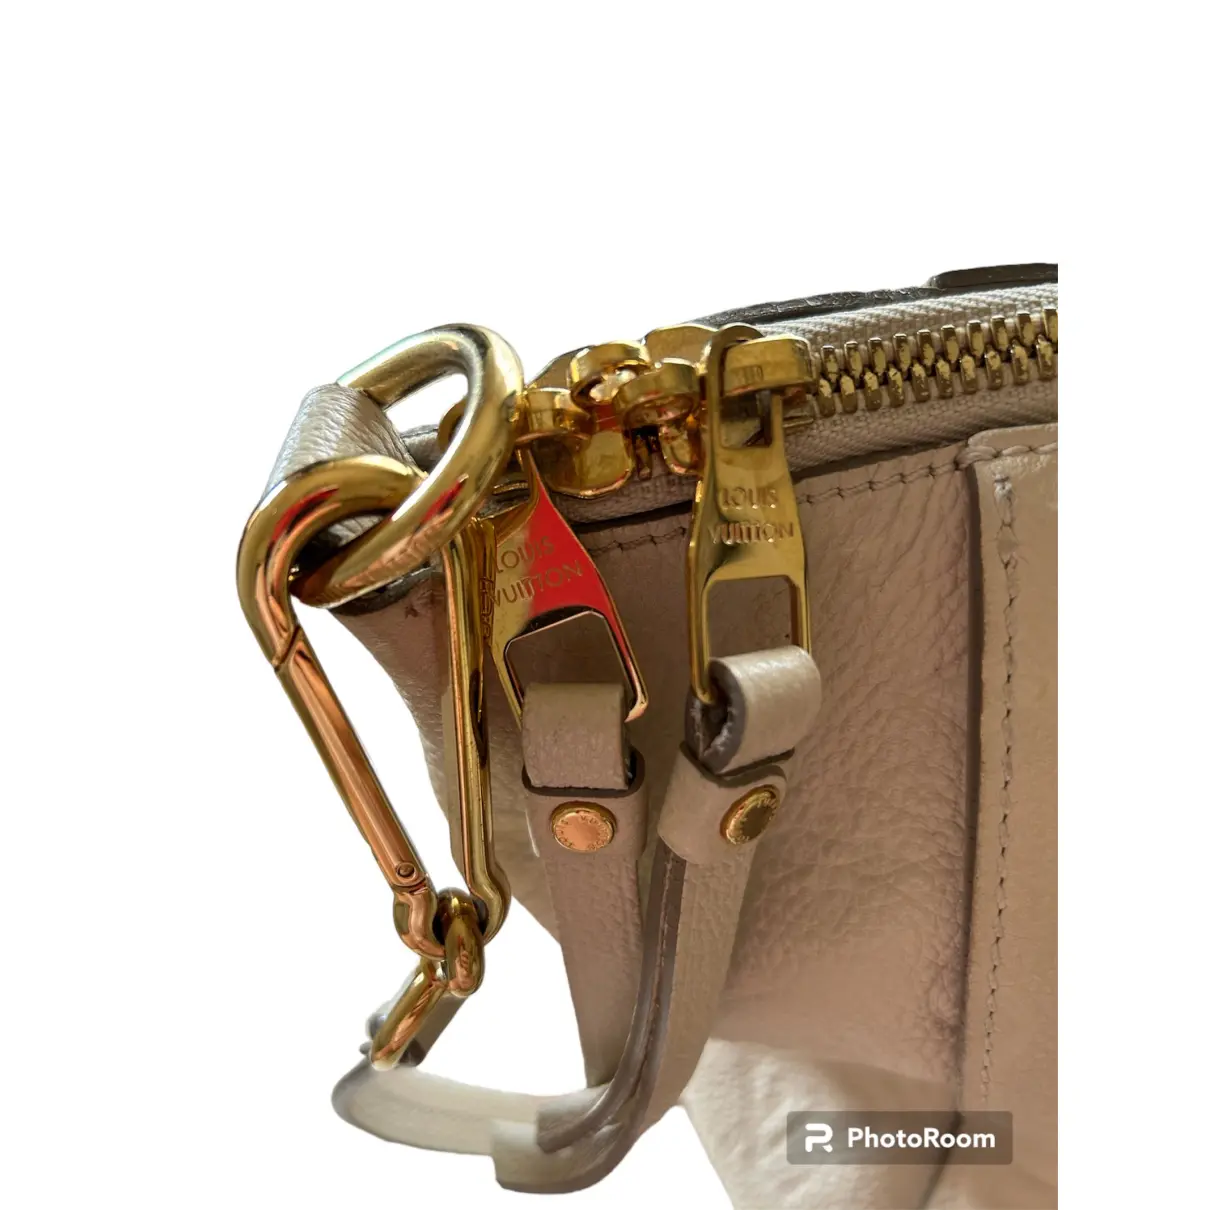 Lumineuse leather handbag Louis Vuitton